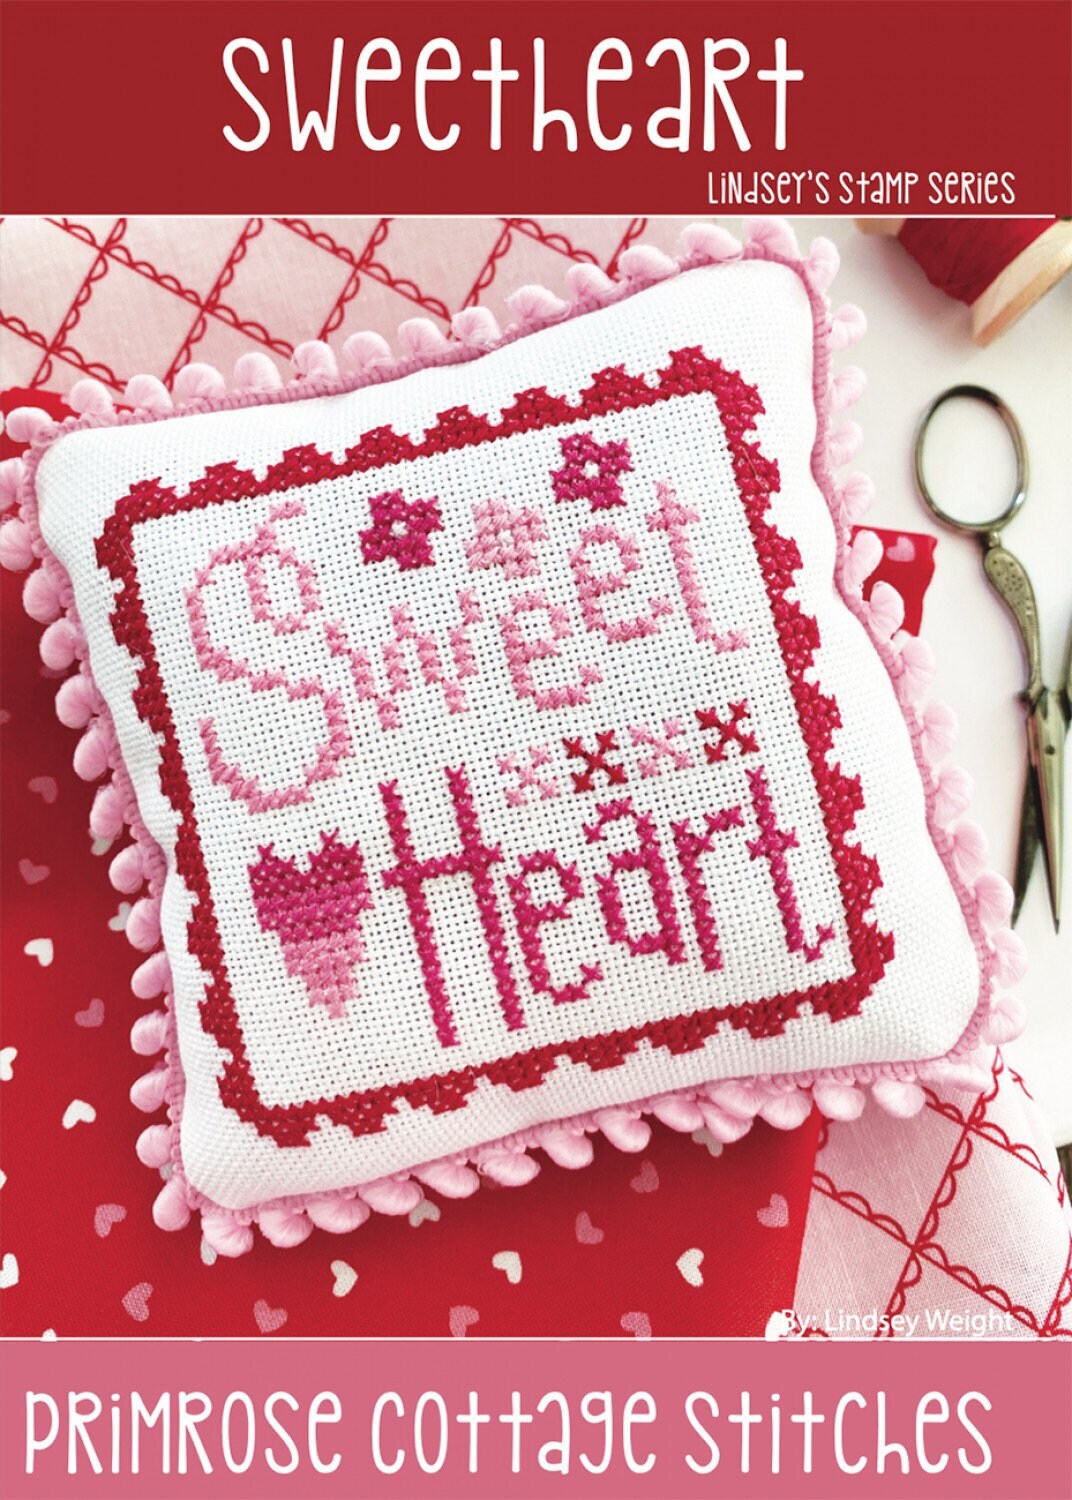 Sweetheart Cross Stitch Pattern - Primrose Cottage Stitches - 43 x 43 stitches - Stamp Series